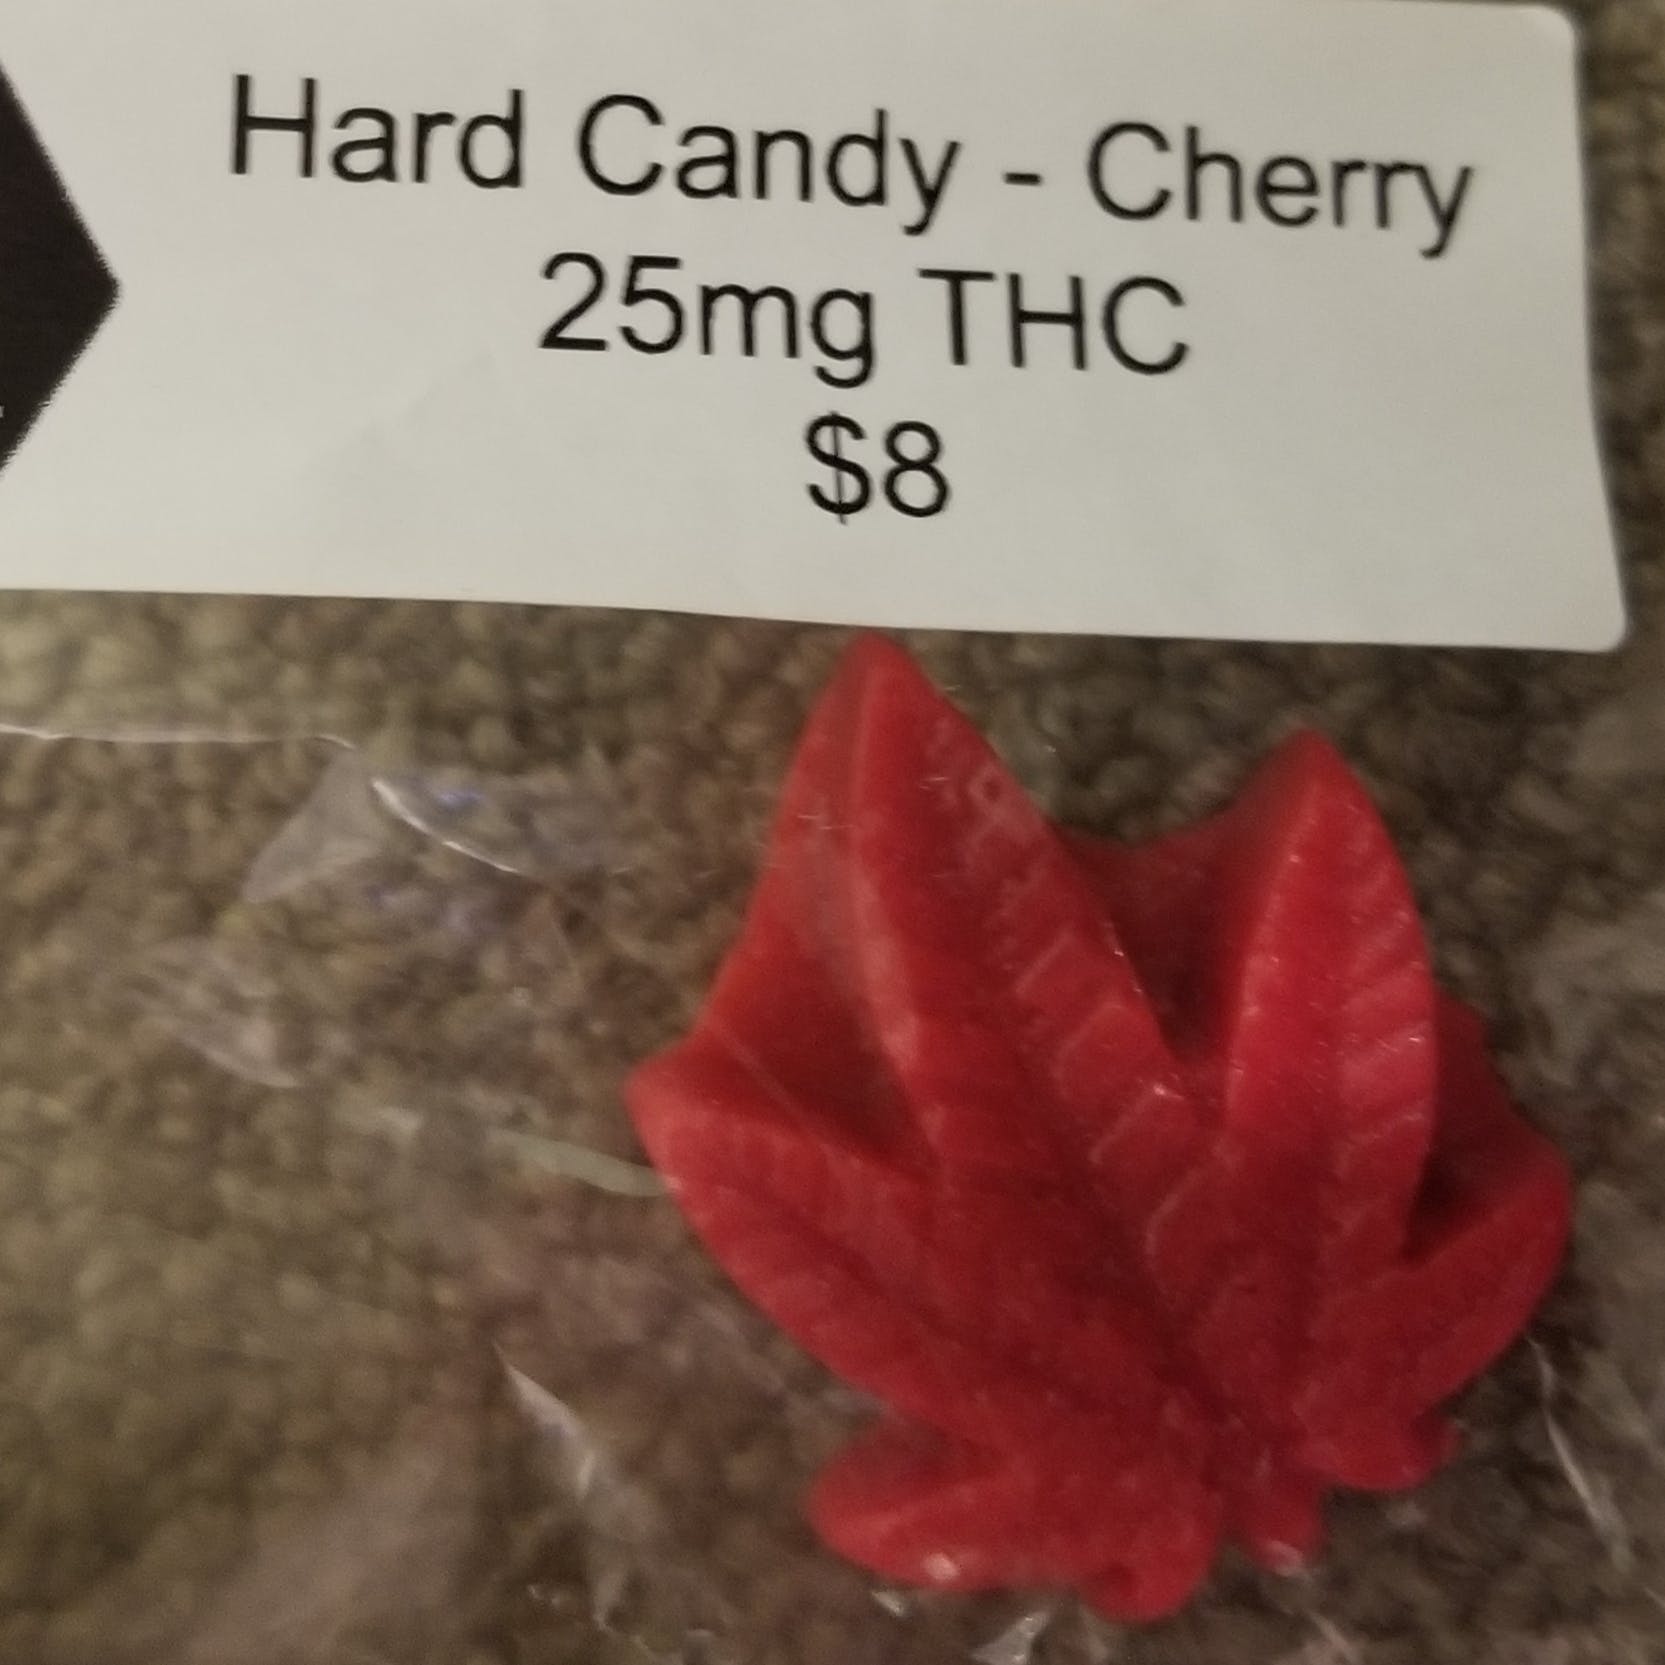 Hard Candy - Cherry 25mg